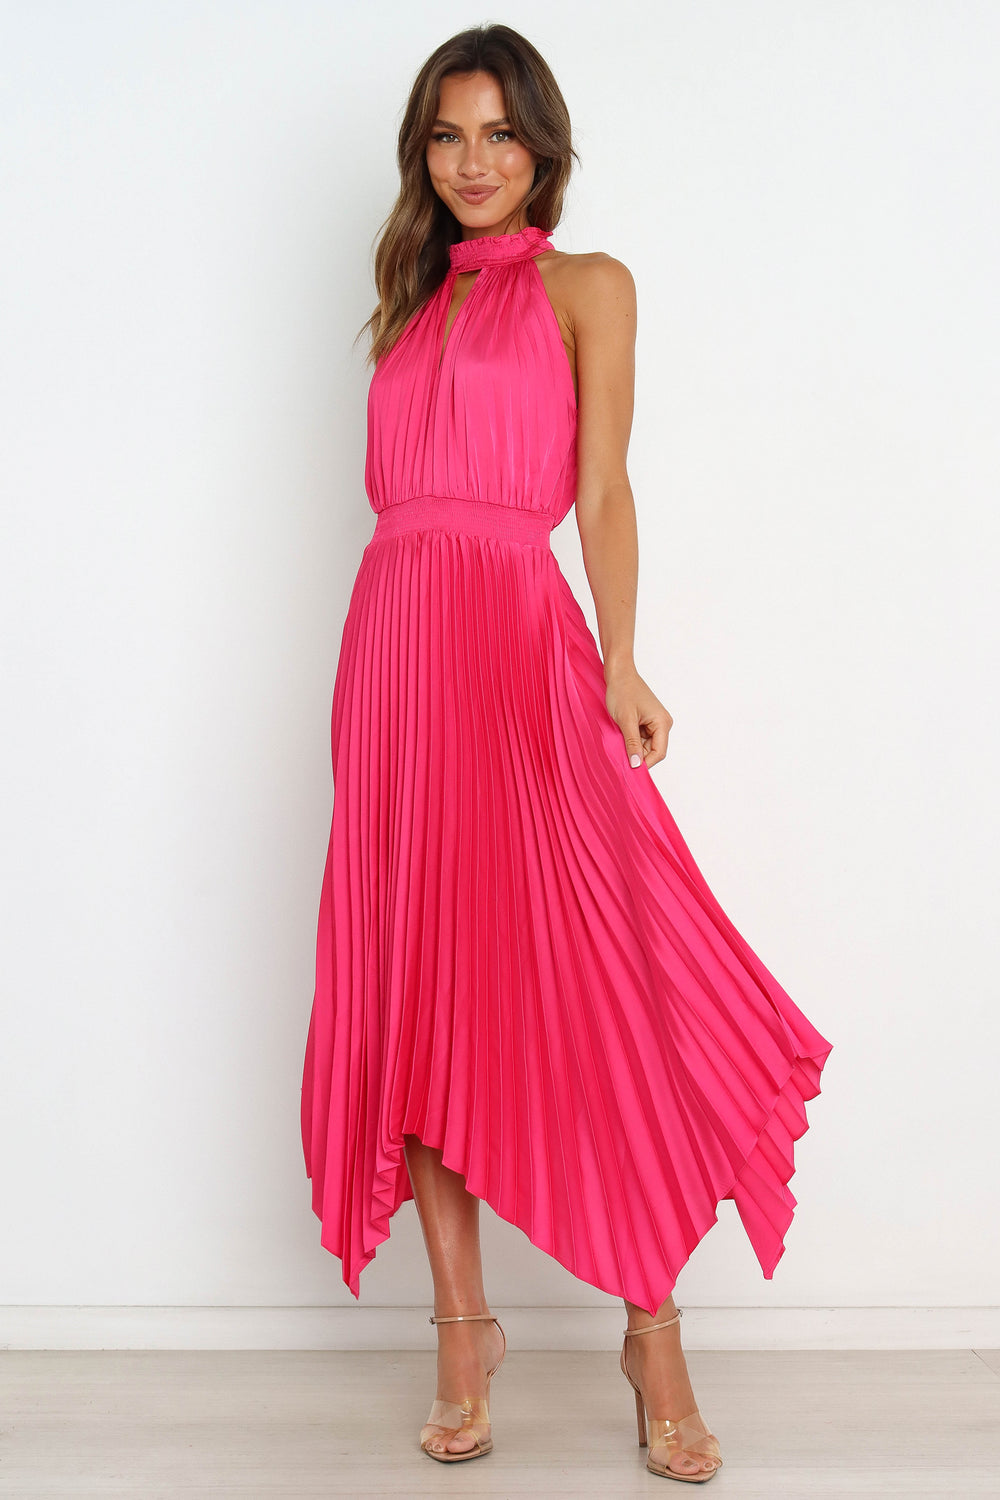 Shop Formal Dress - Dominique Dress - Pink third image